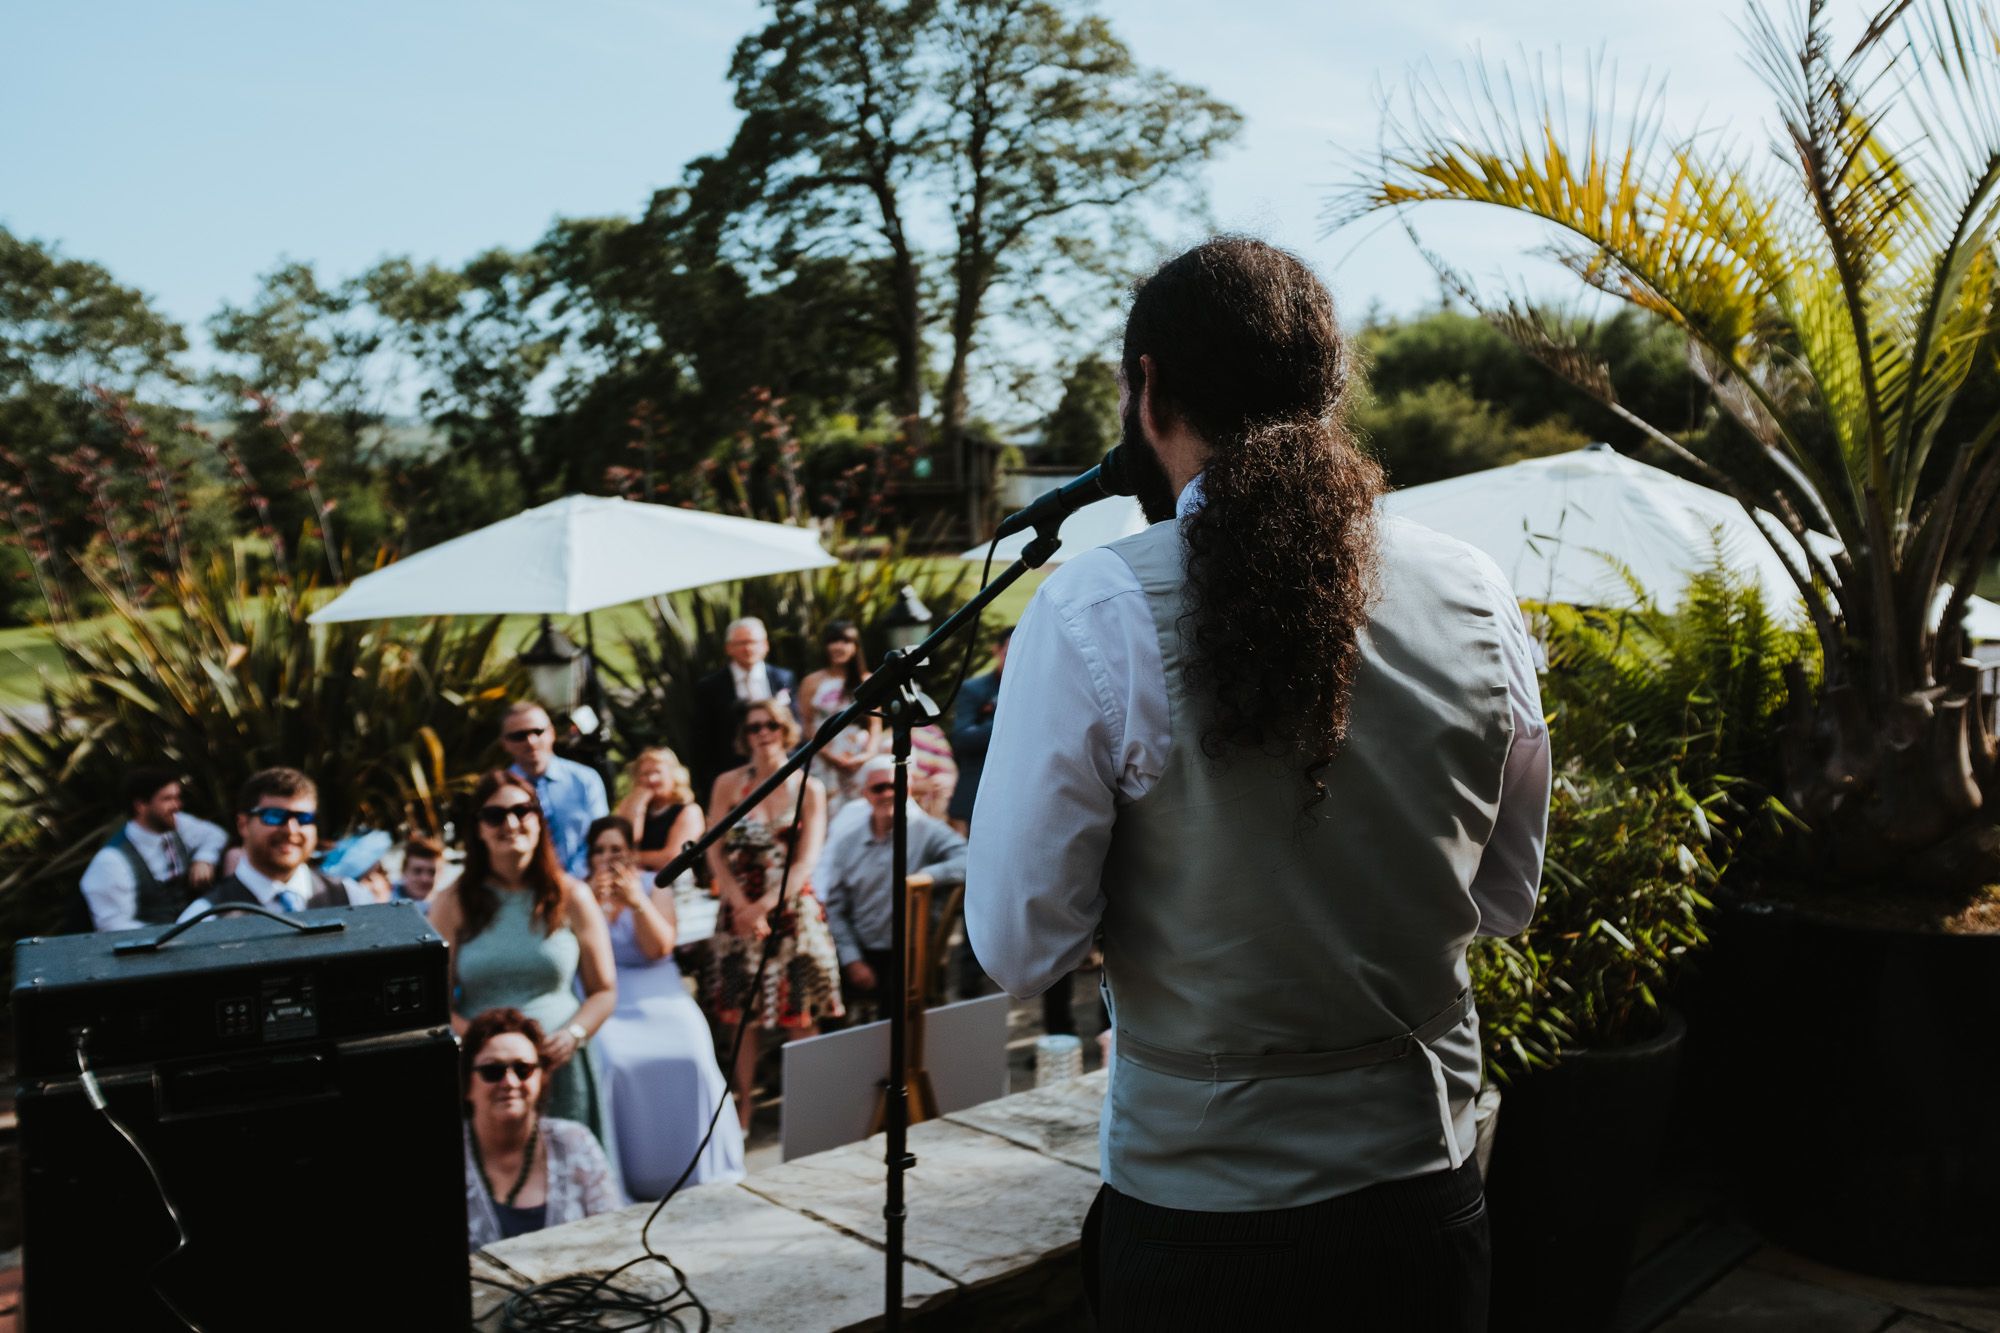 ballinacurra-house-wedding-kinsale-speeches-outdoor